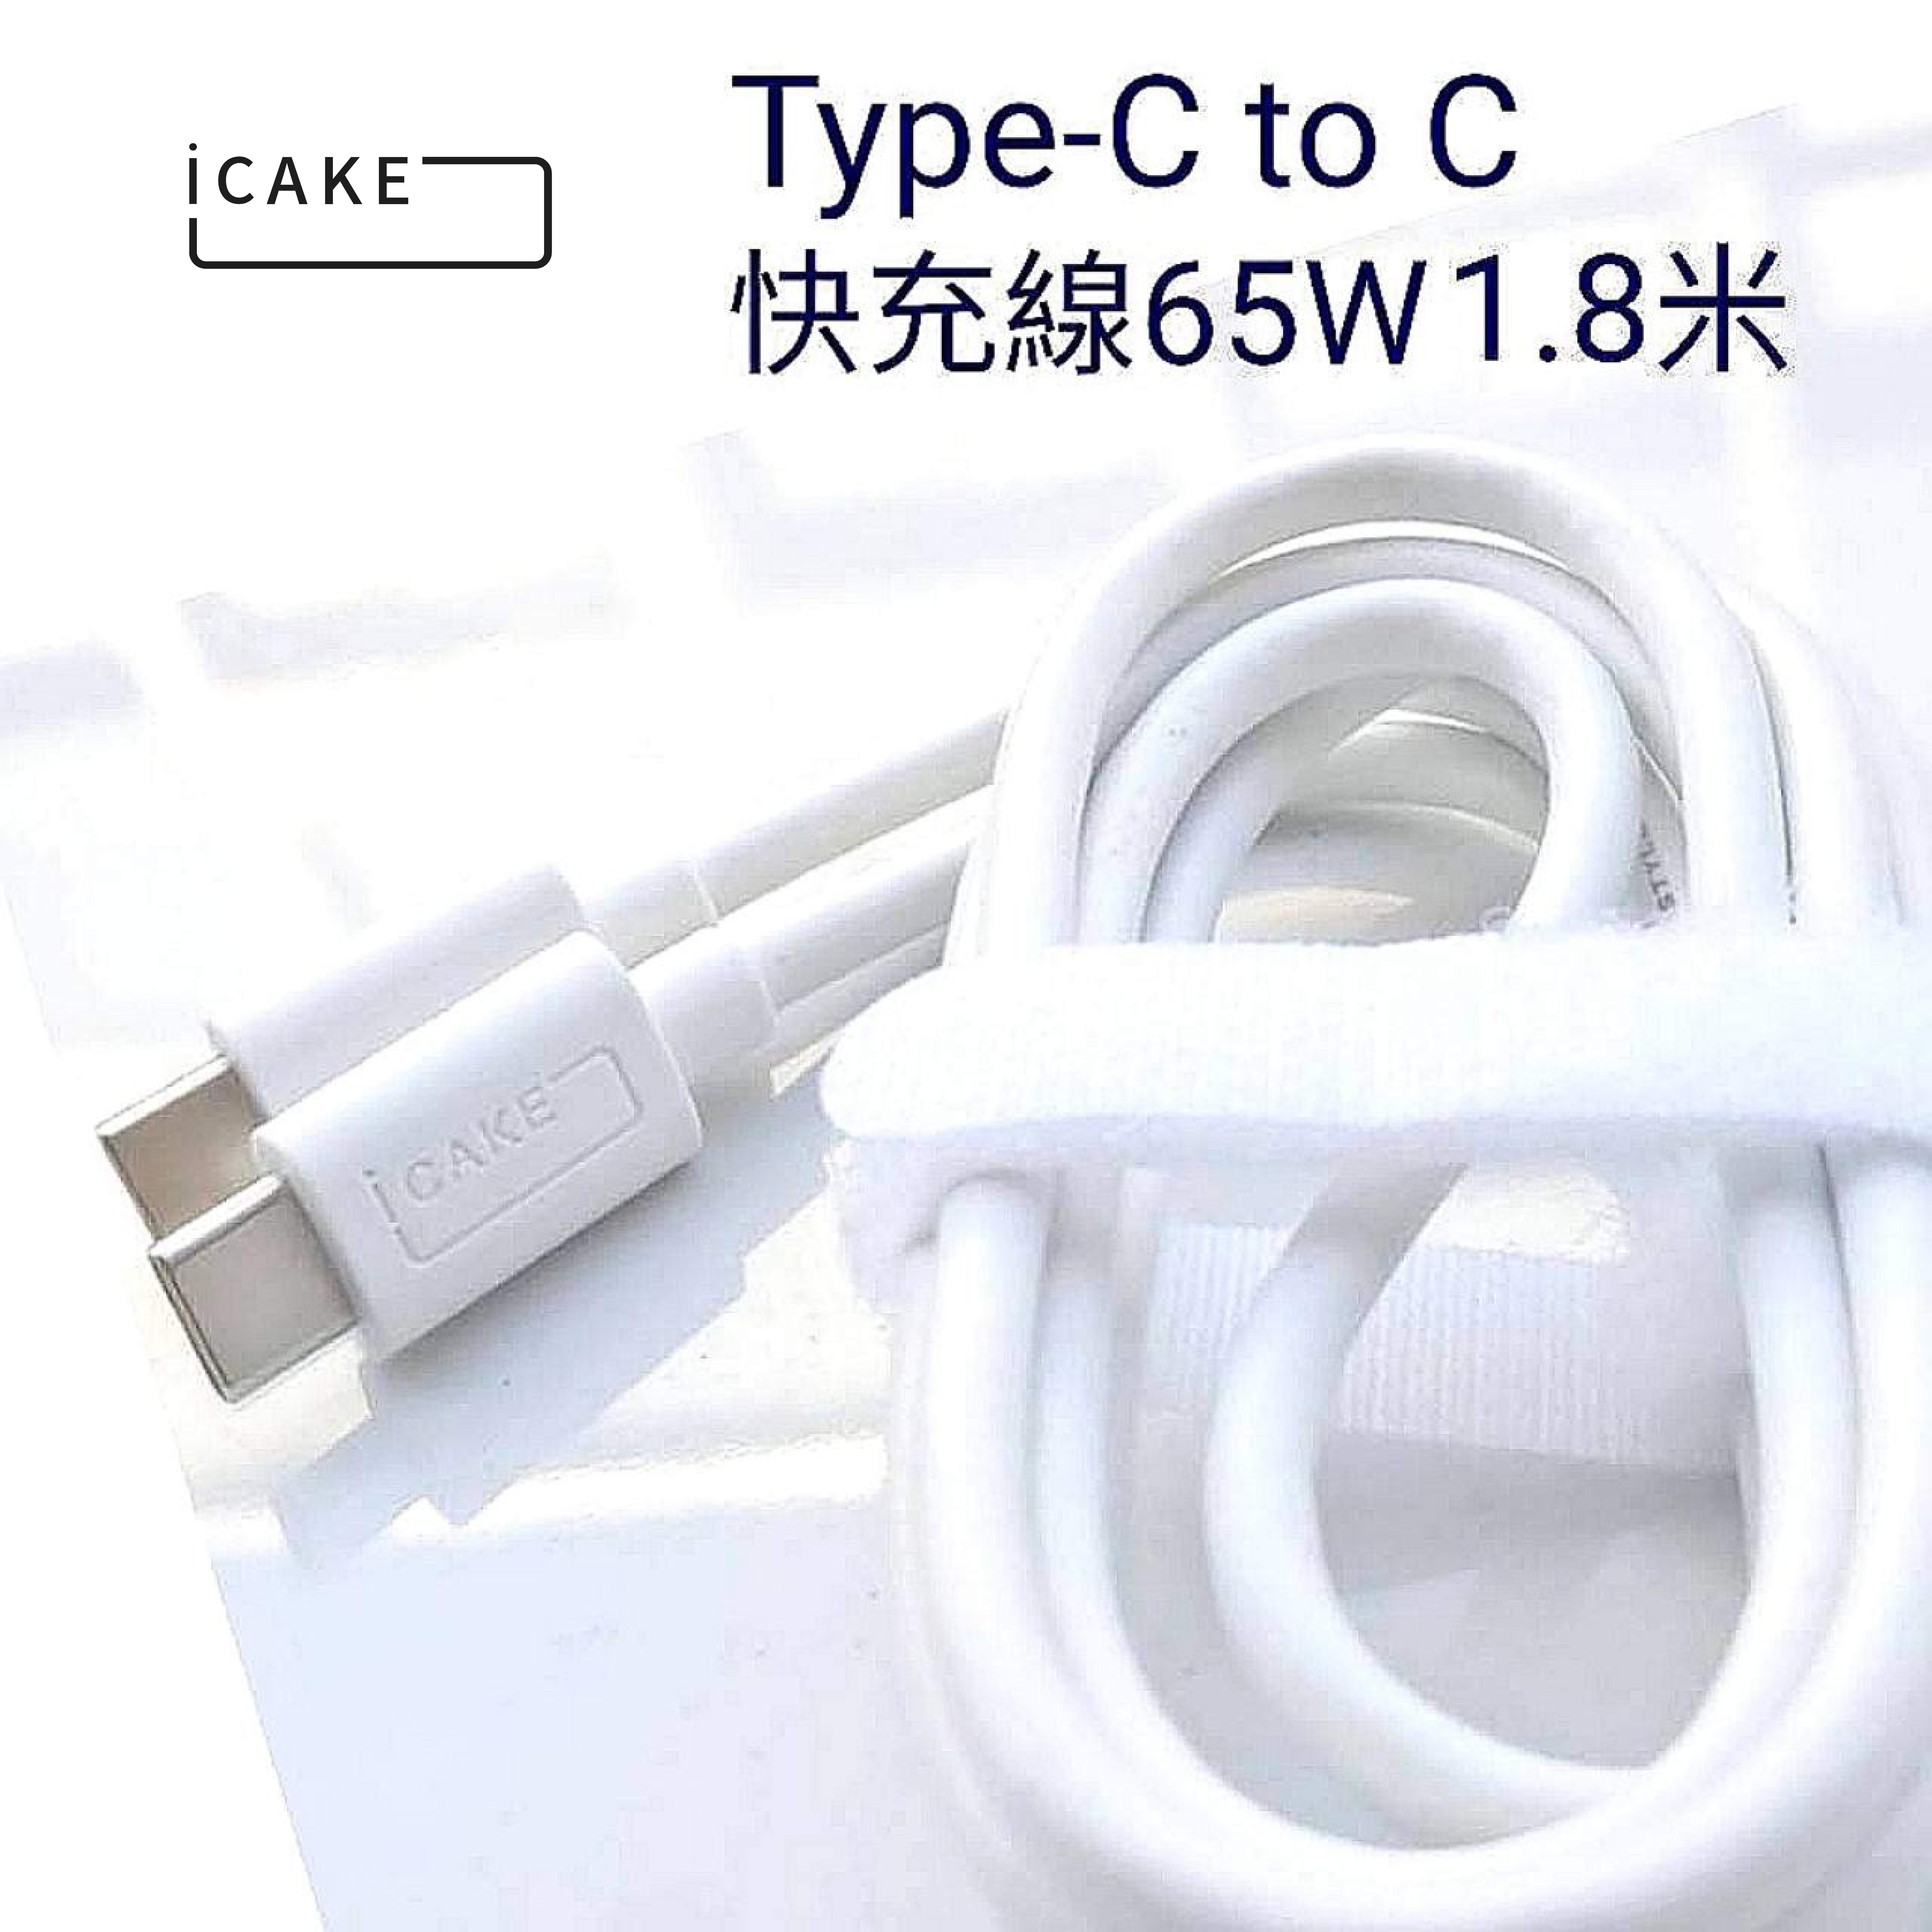 iCAKE Type-C to C 快充線 / 數據傳輸線 20V @3.25A 65W 1.8米長